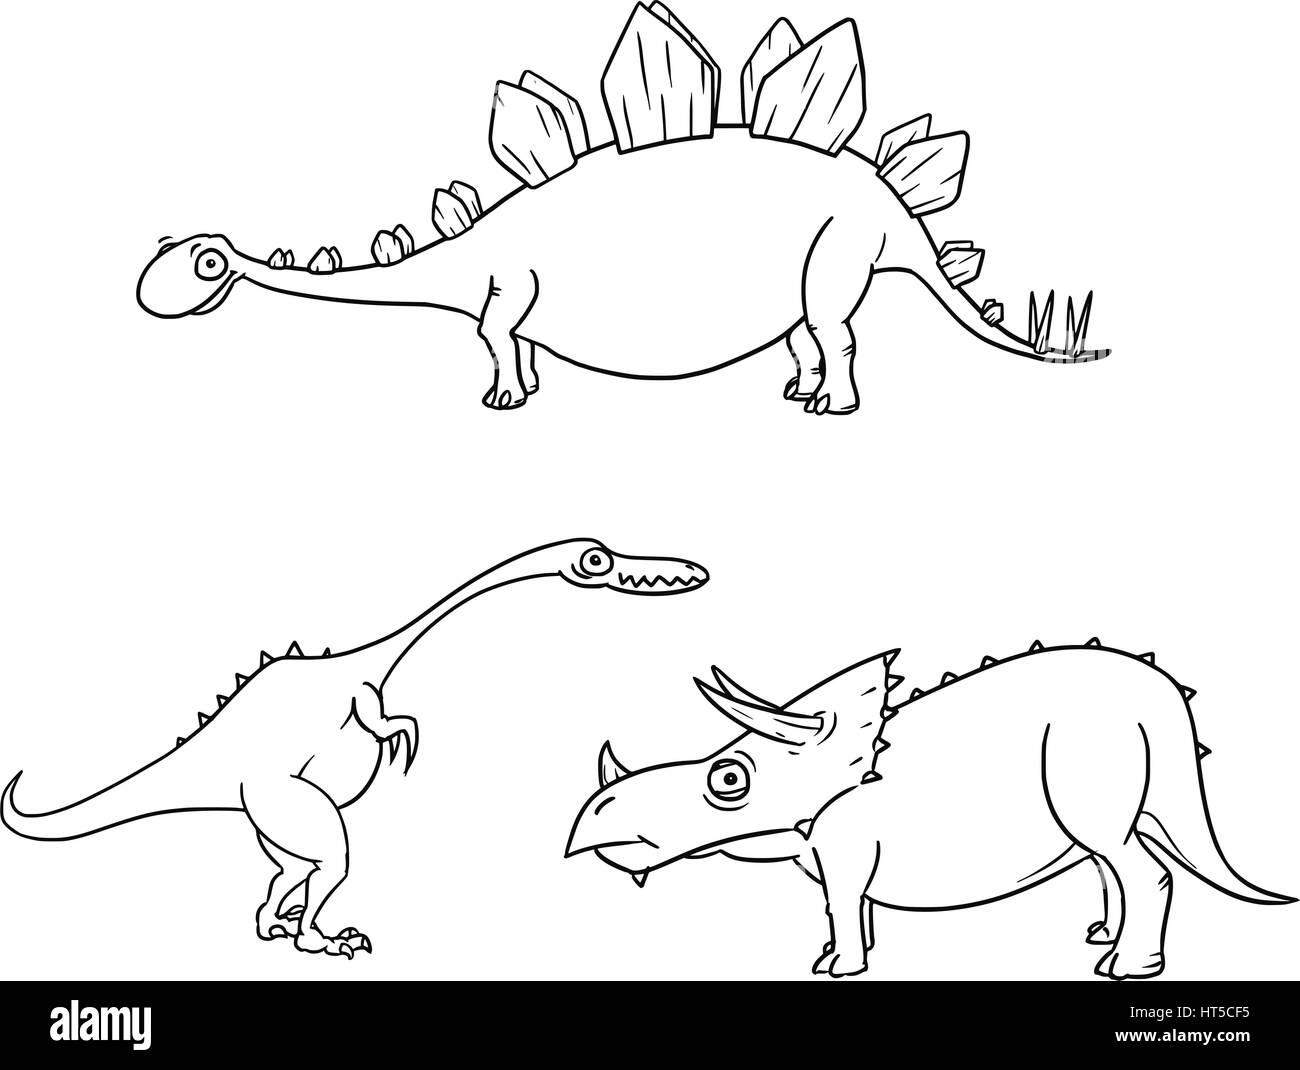 Cartoon Vector Set 04 de l'ancien monster dinosaure Triceratops Stegosaurus -,,Coelophysis Illustration de Vecteur